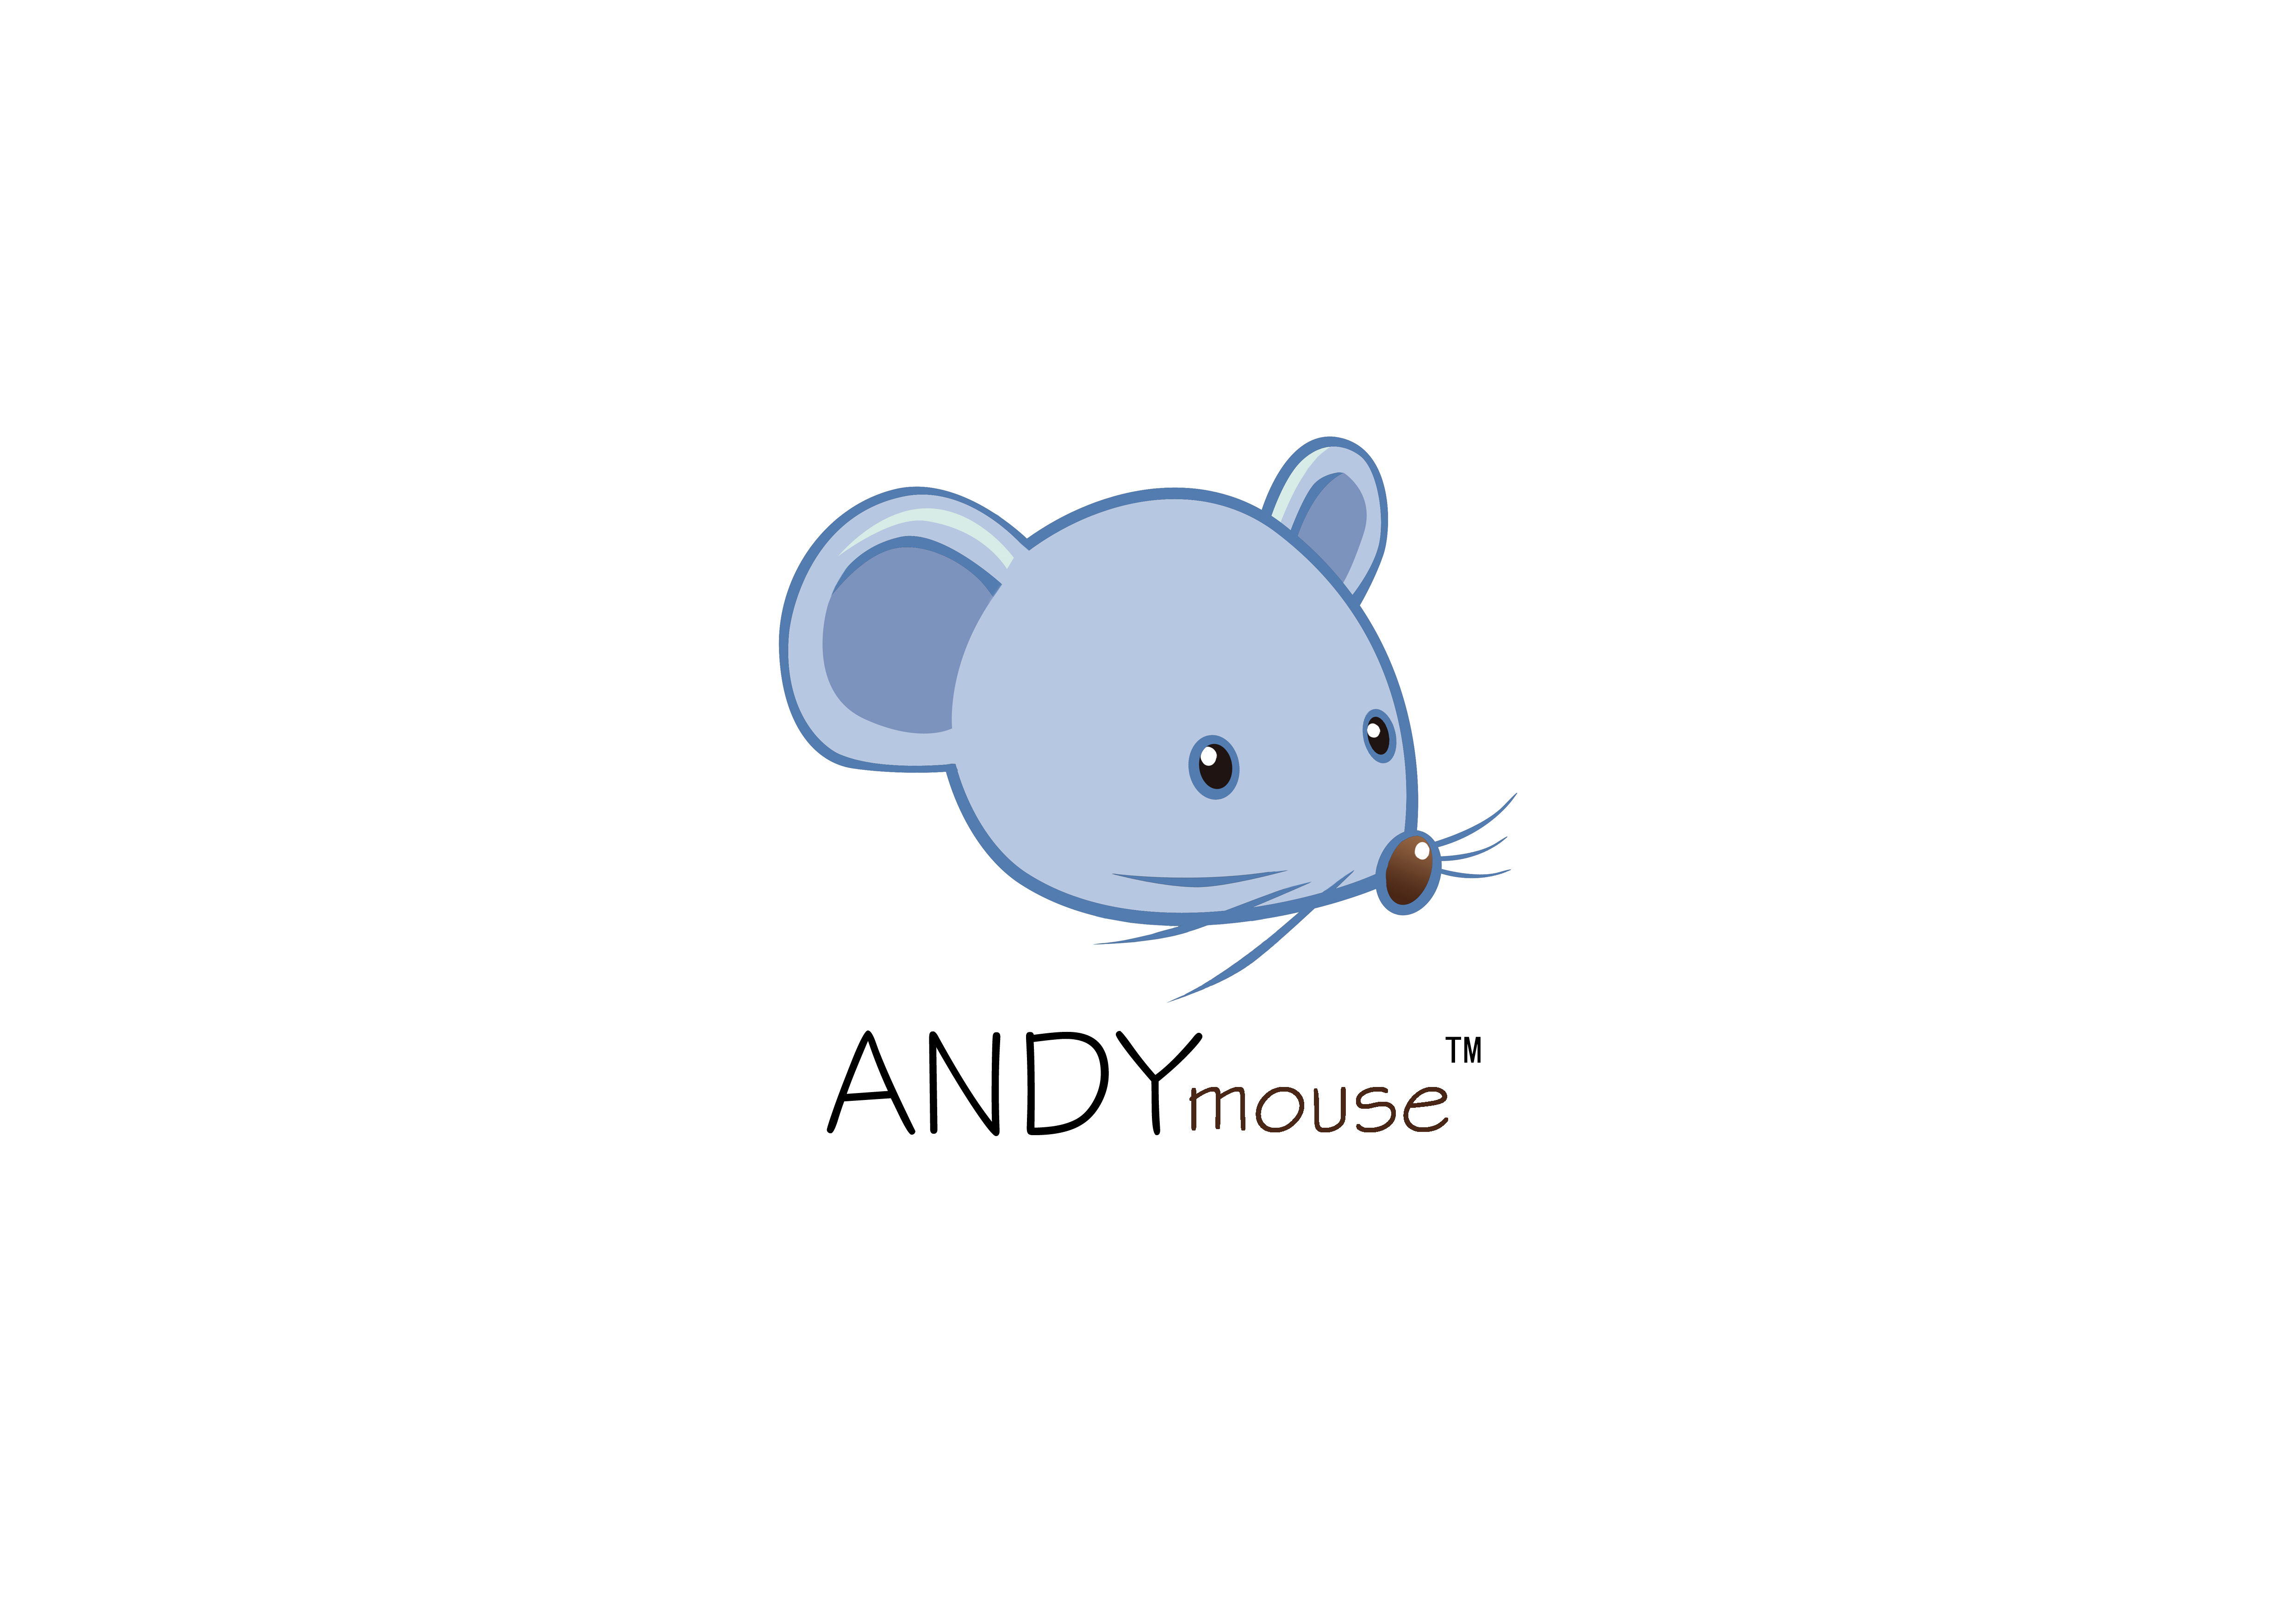 andi mouse logo